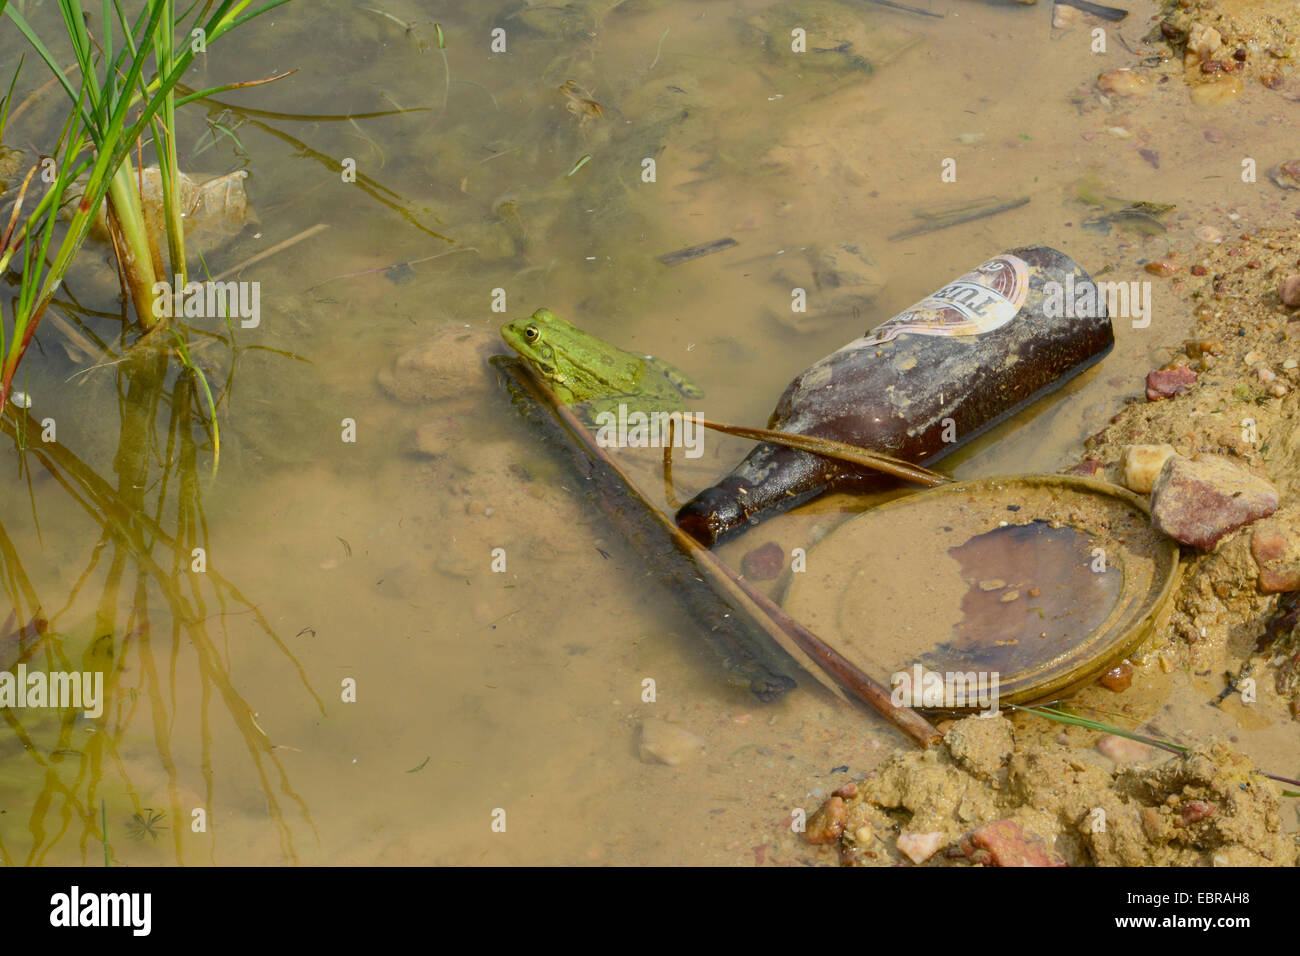 marsh frog, lake frog (Rana ridibunda, Pelophylax ridibundus), sitting at the shore of a full with rubbish inshore water, Turkey, Thrace Stock Photo